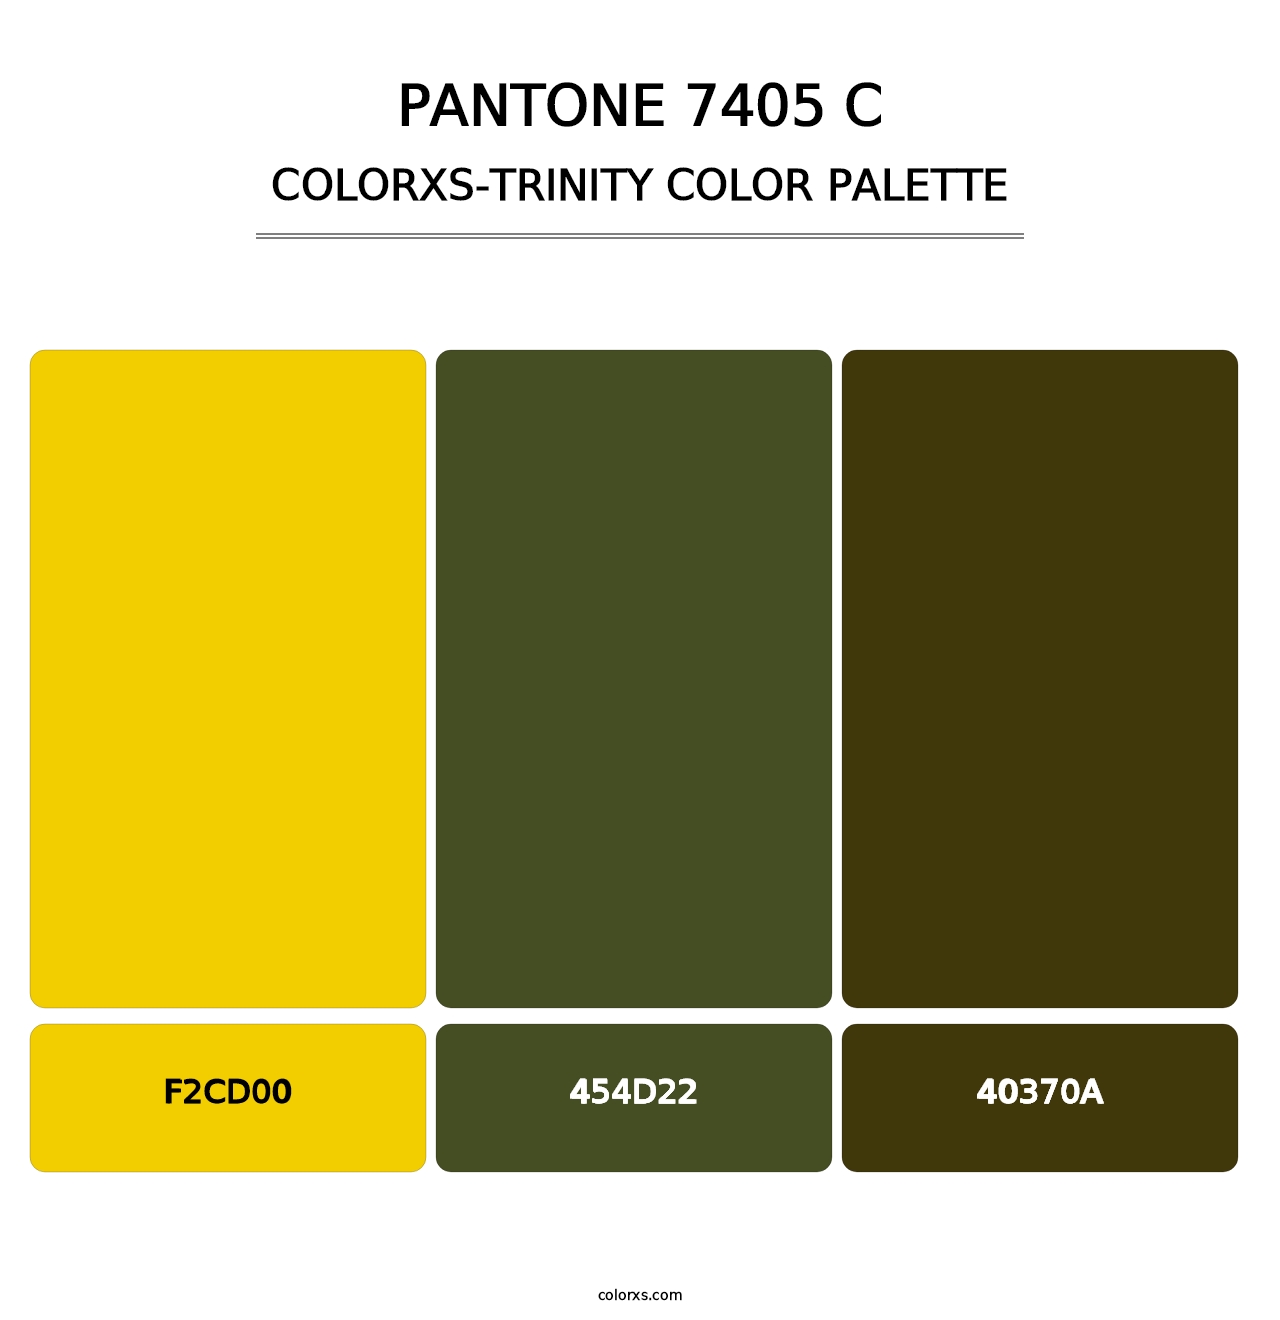 PANTONE 7405 C - Colorxs Trinity Palette